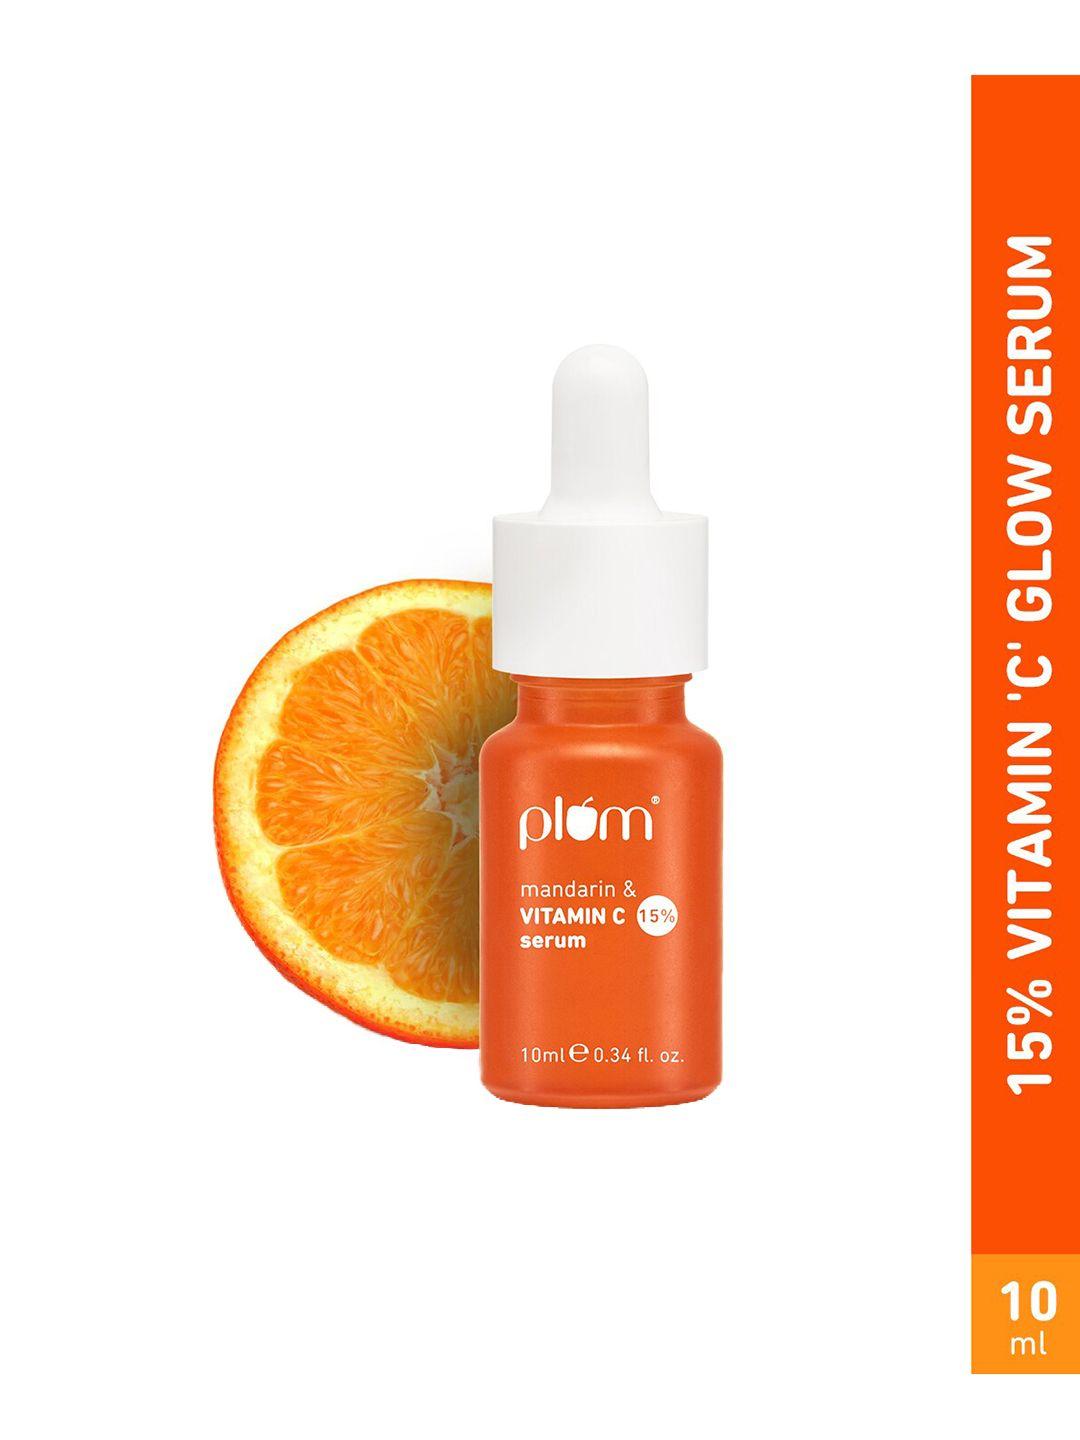 plum mandarin & 15% vitamin c glow face serum - lightweight & quick-absorbing - 10ml